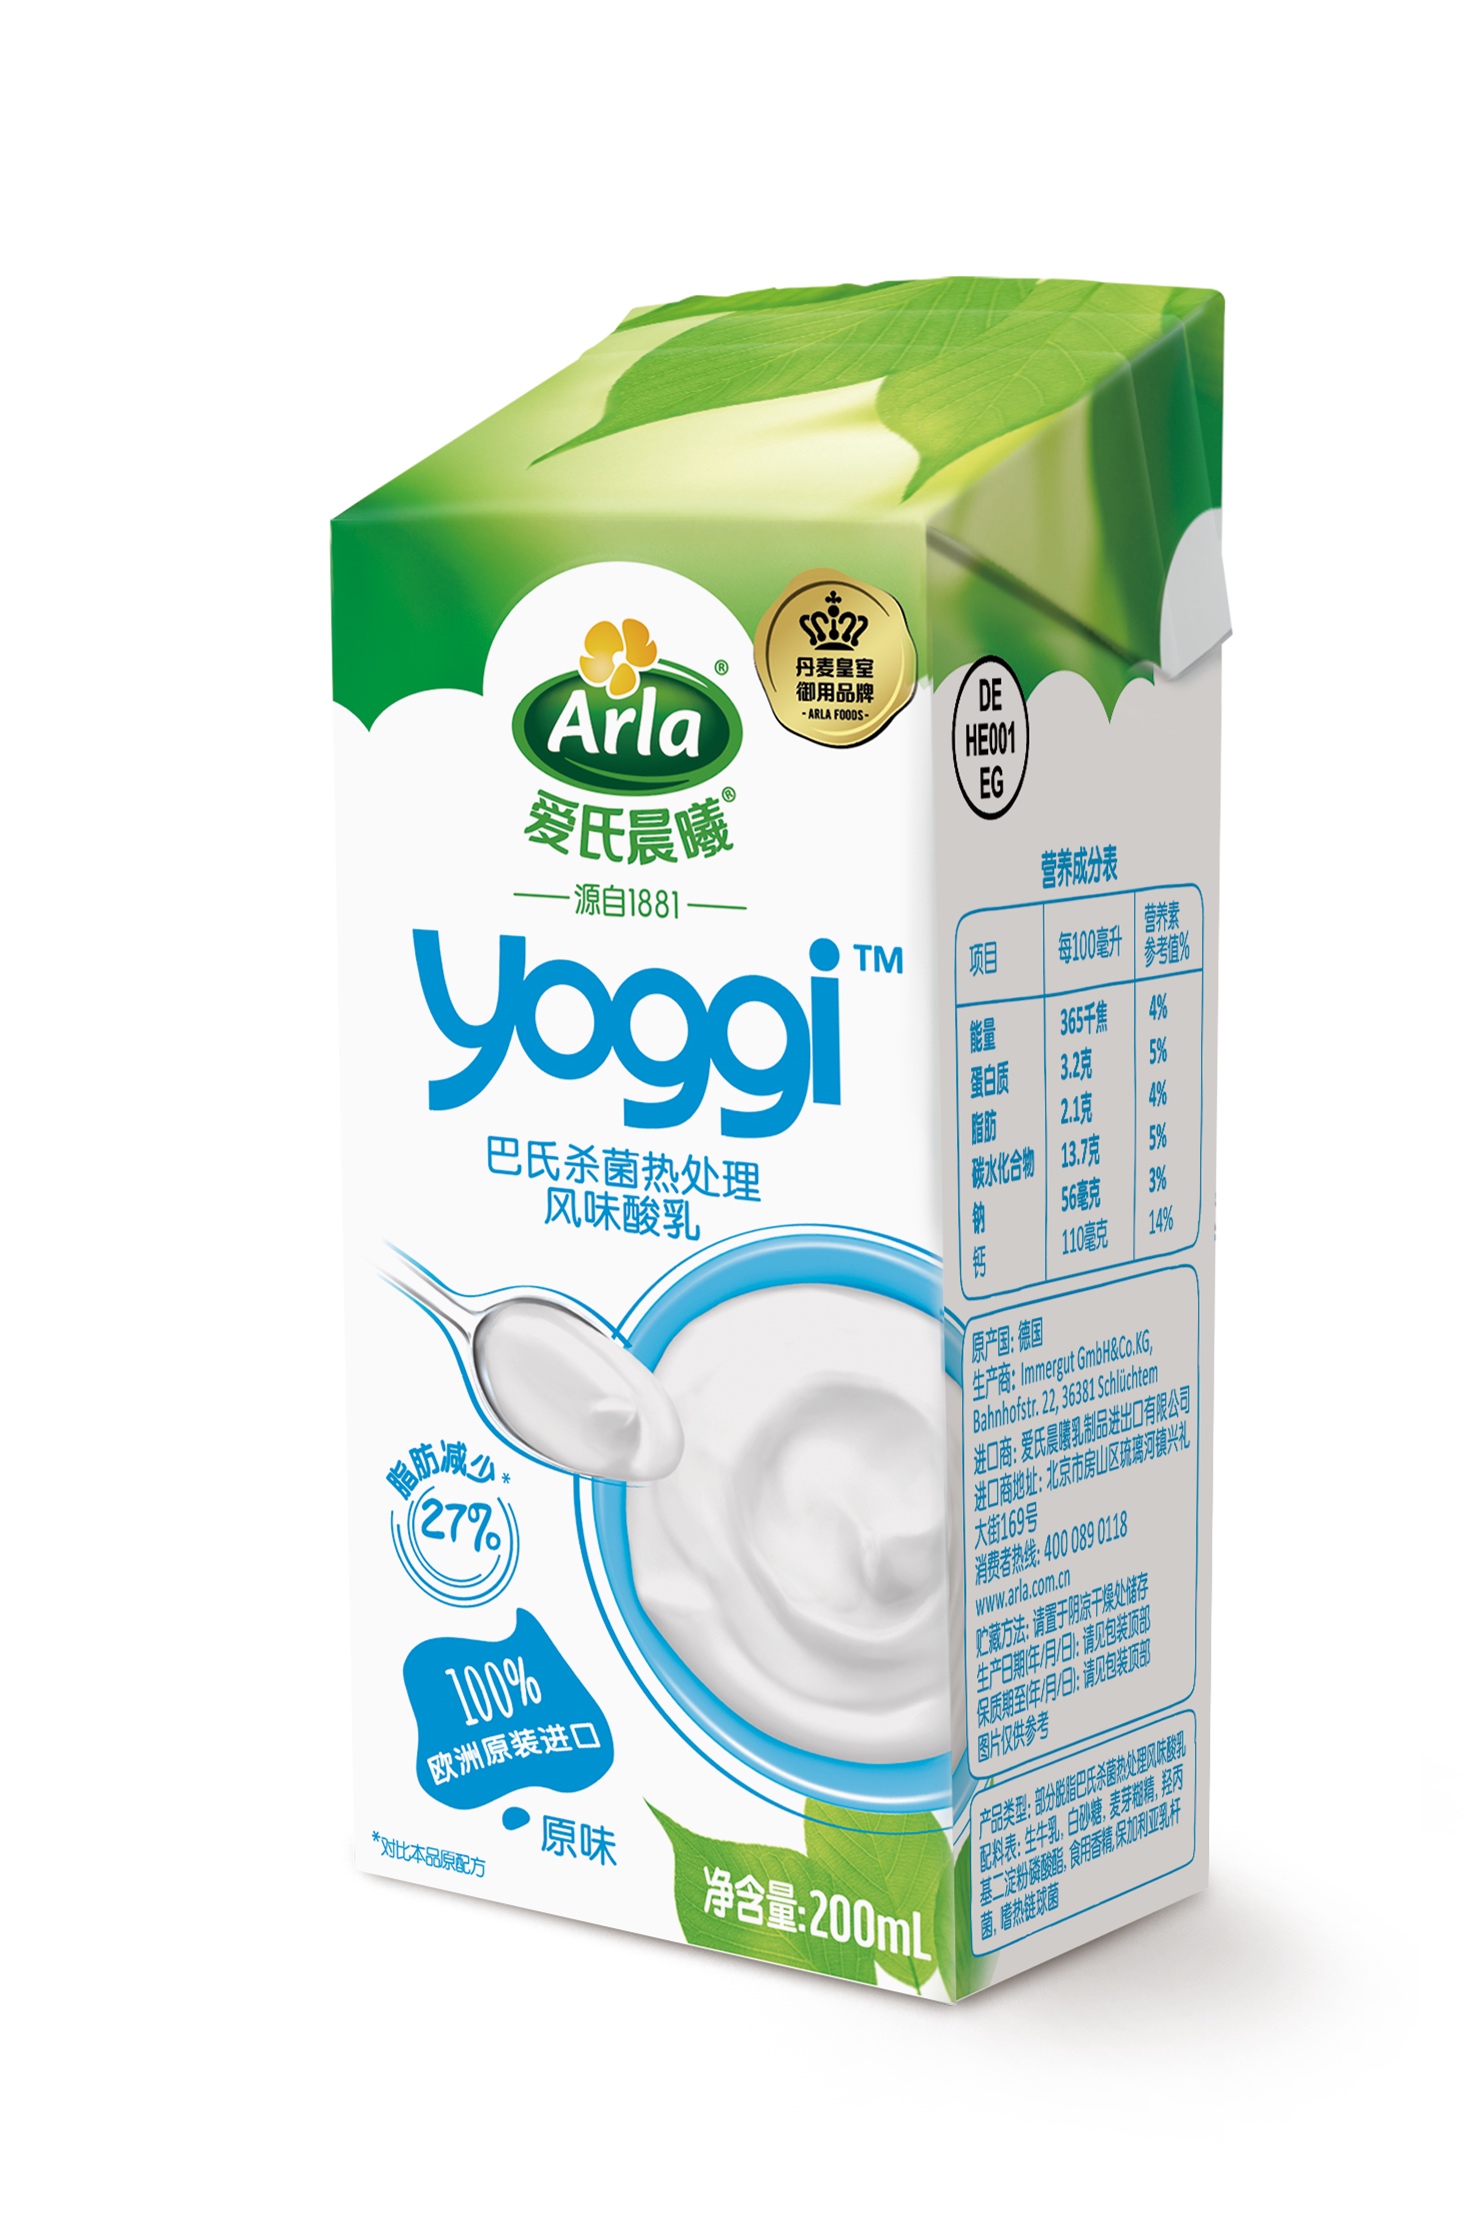 Arla ®爱氏晨曦 ™ Yoggi常温酸奶-原味 200毫升